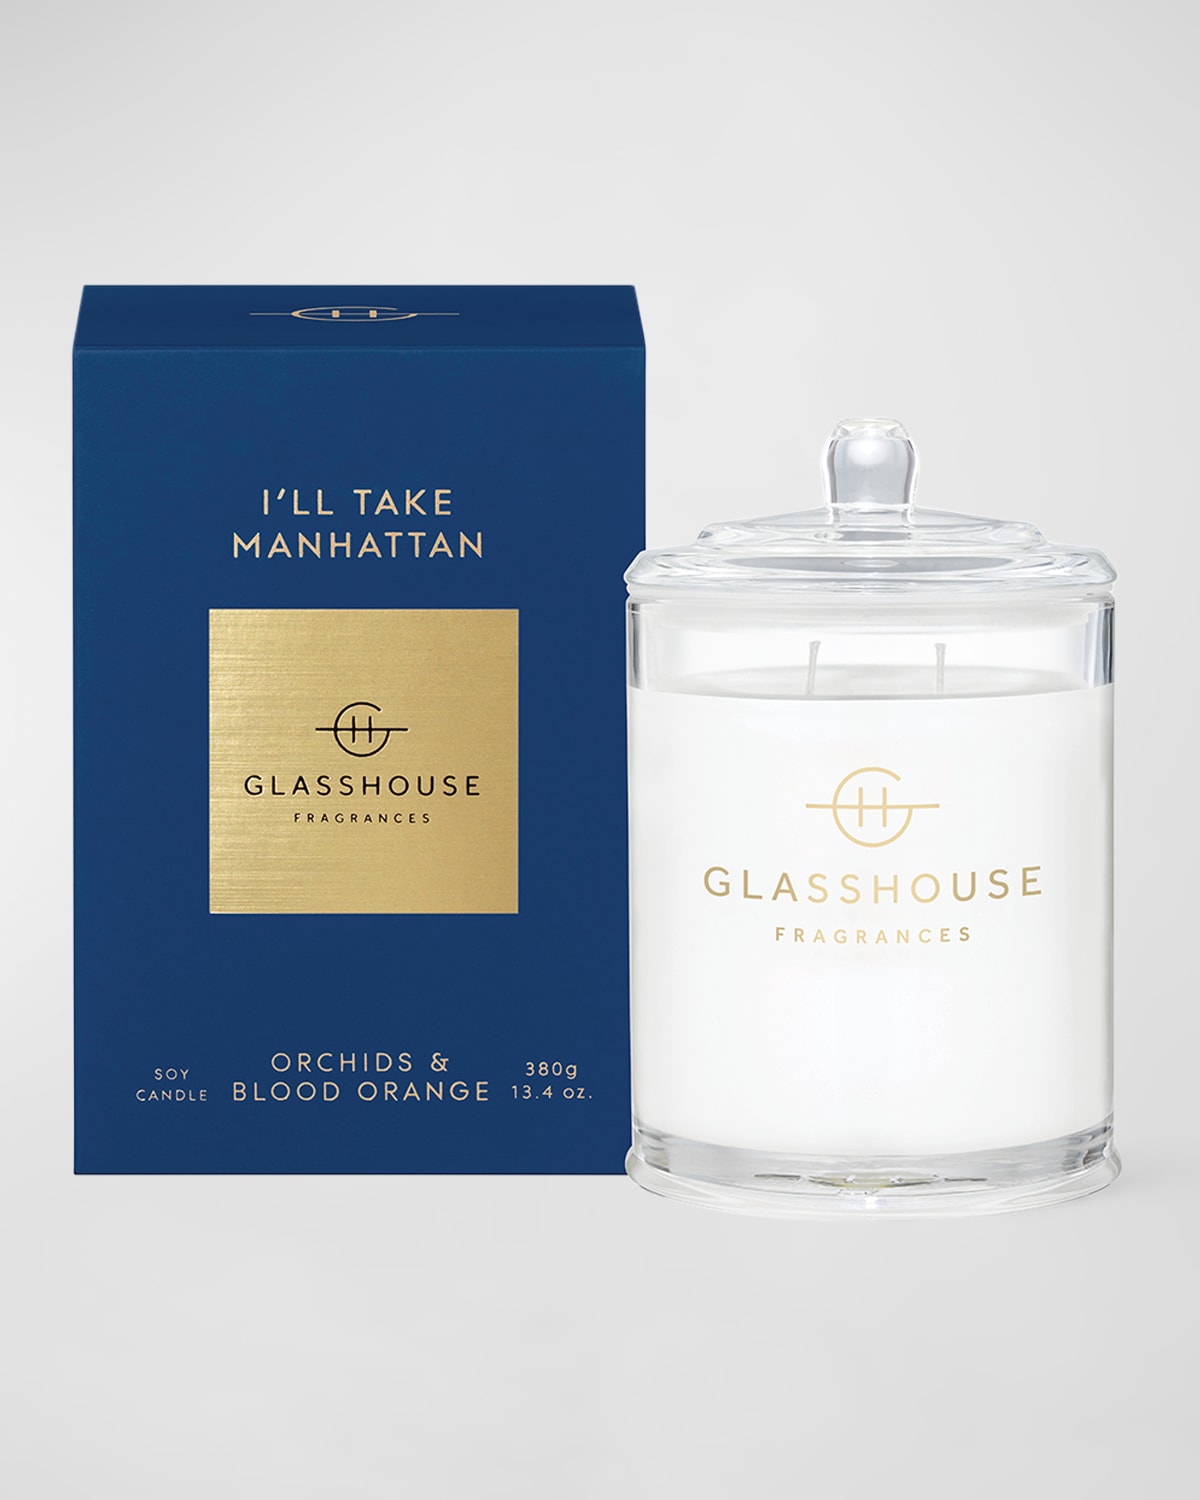 Glasshouse Fragrances I'll Take Manhattan 13.4 oz Triple Scented Candle In Blue